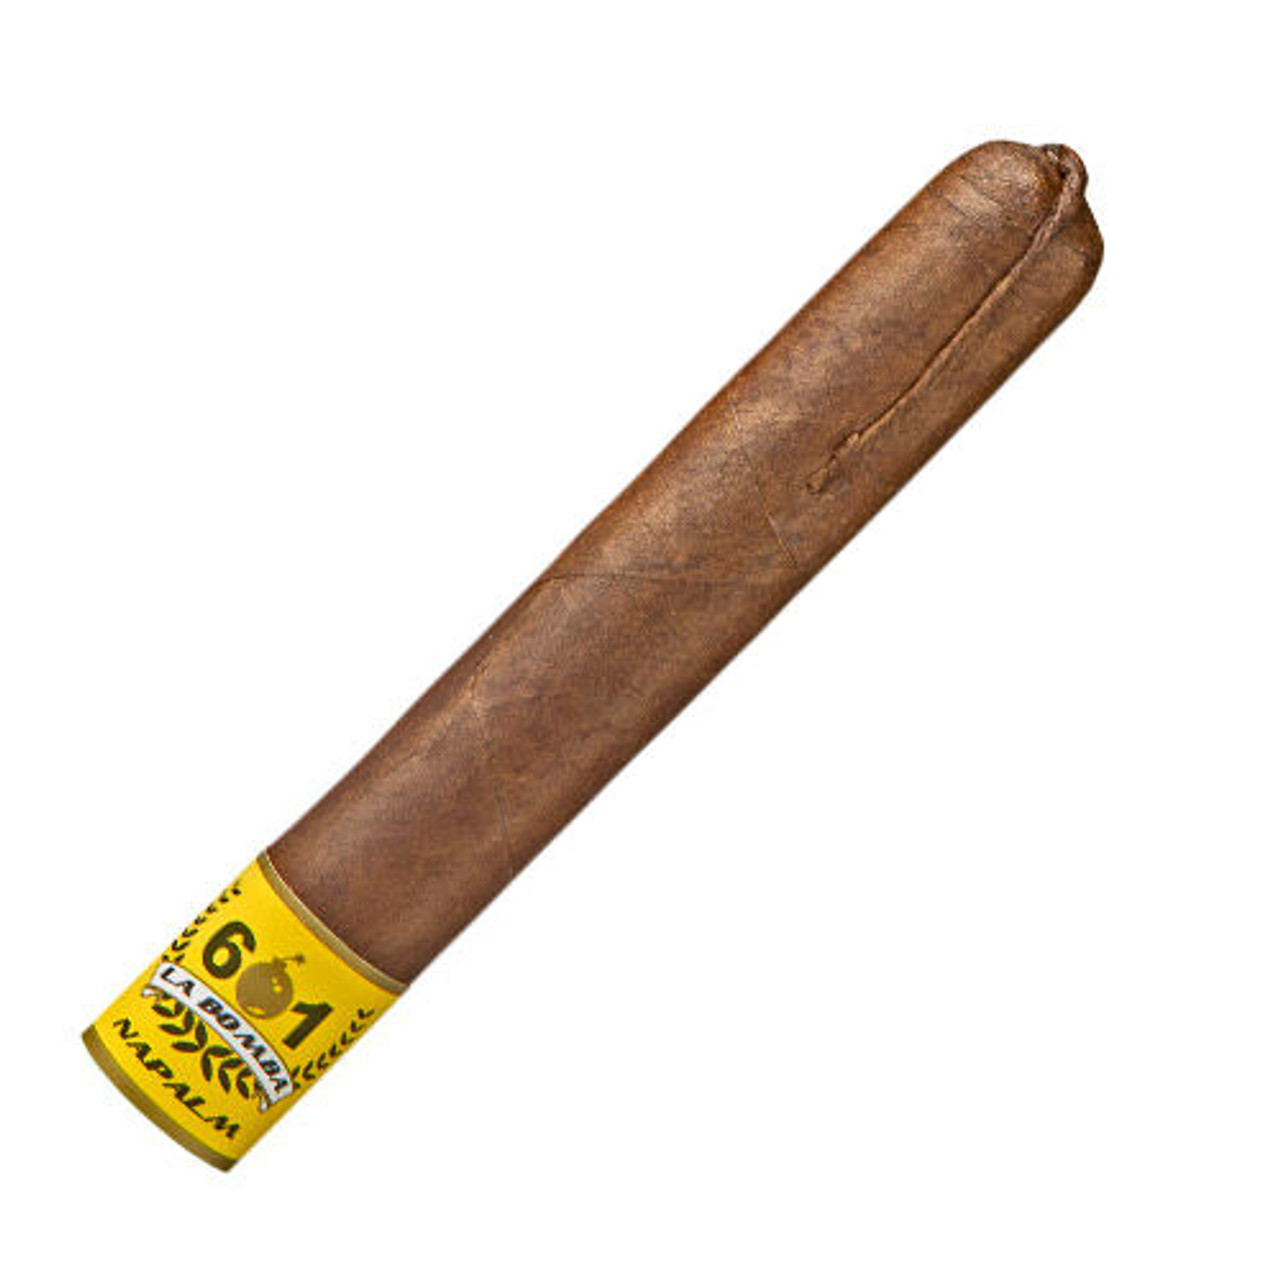 601 La Bomba Napalm - 5 x 52 Cigars (Box of 10)